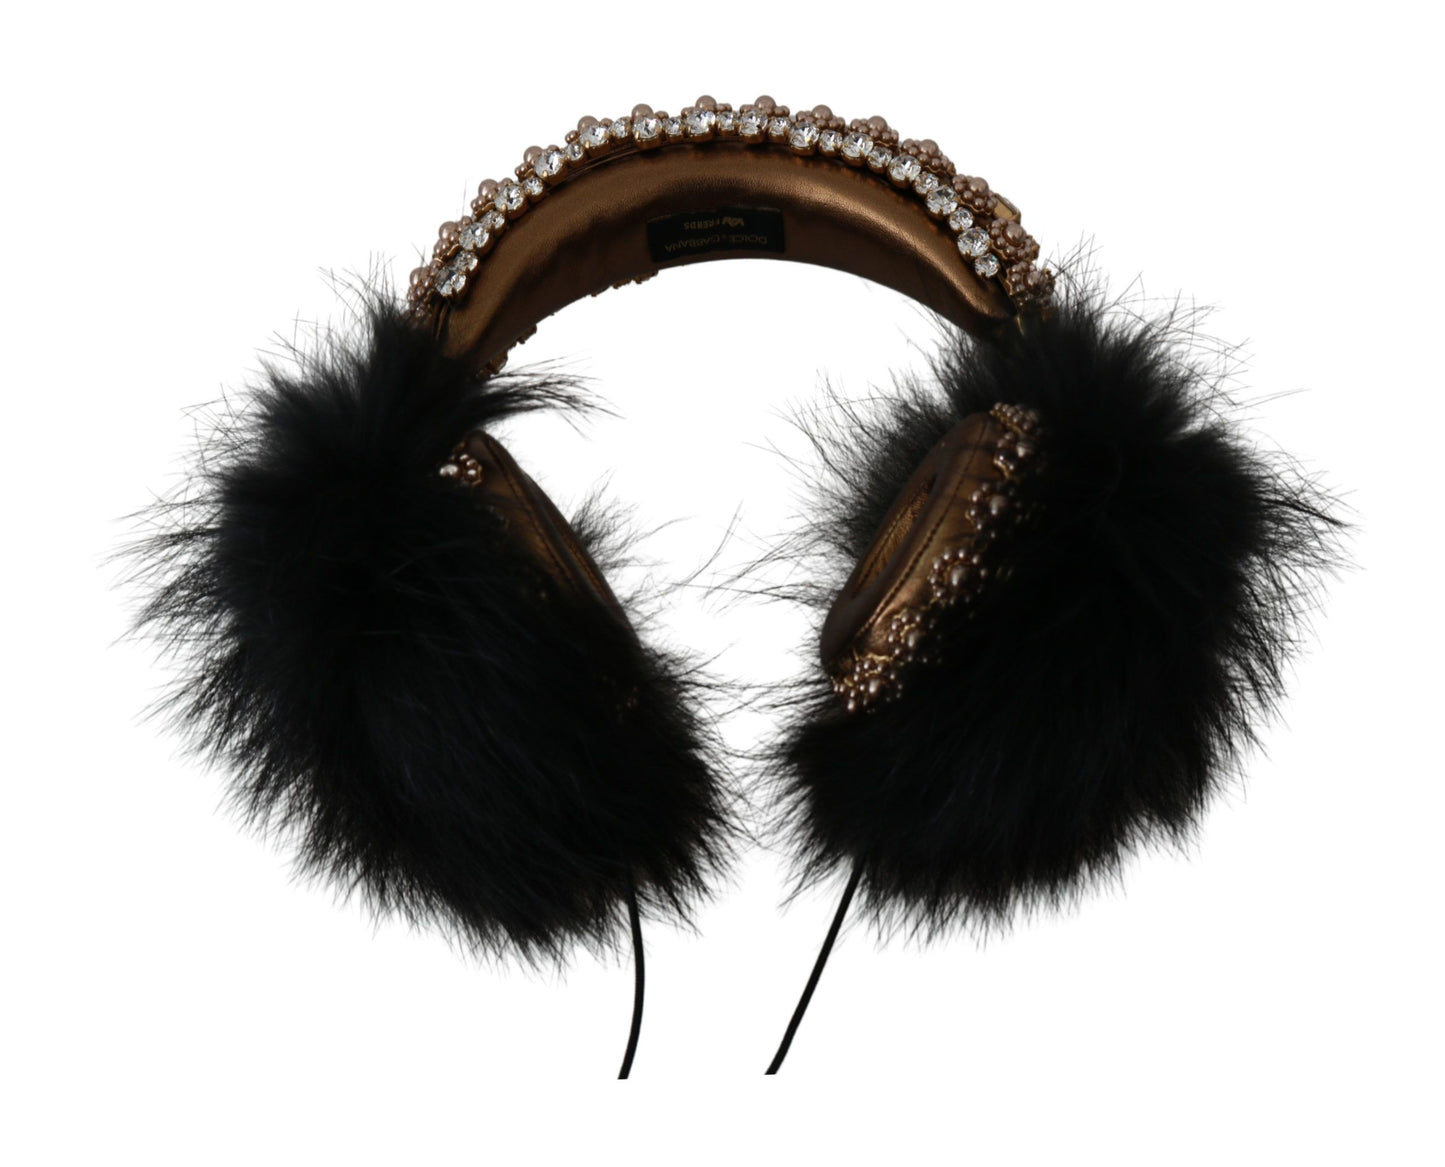 Gold Black Crystal Fur Headset Audio Headphones